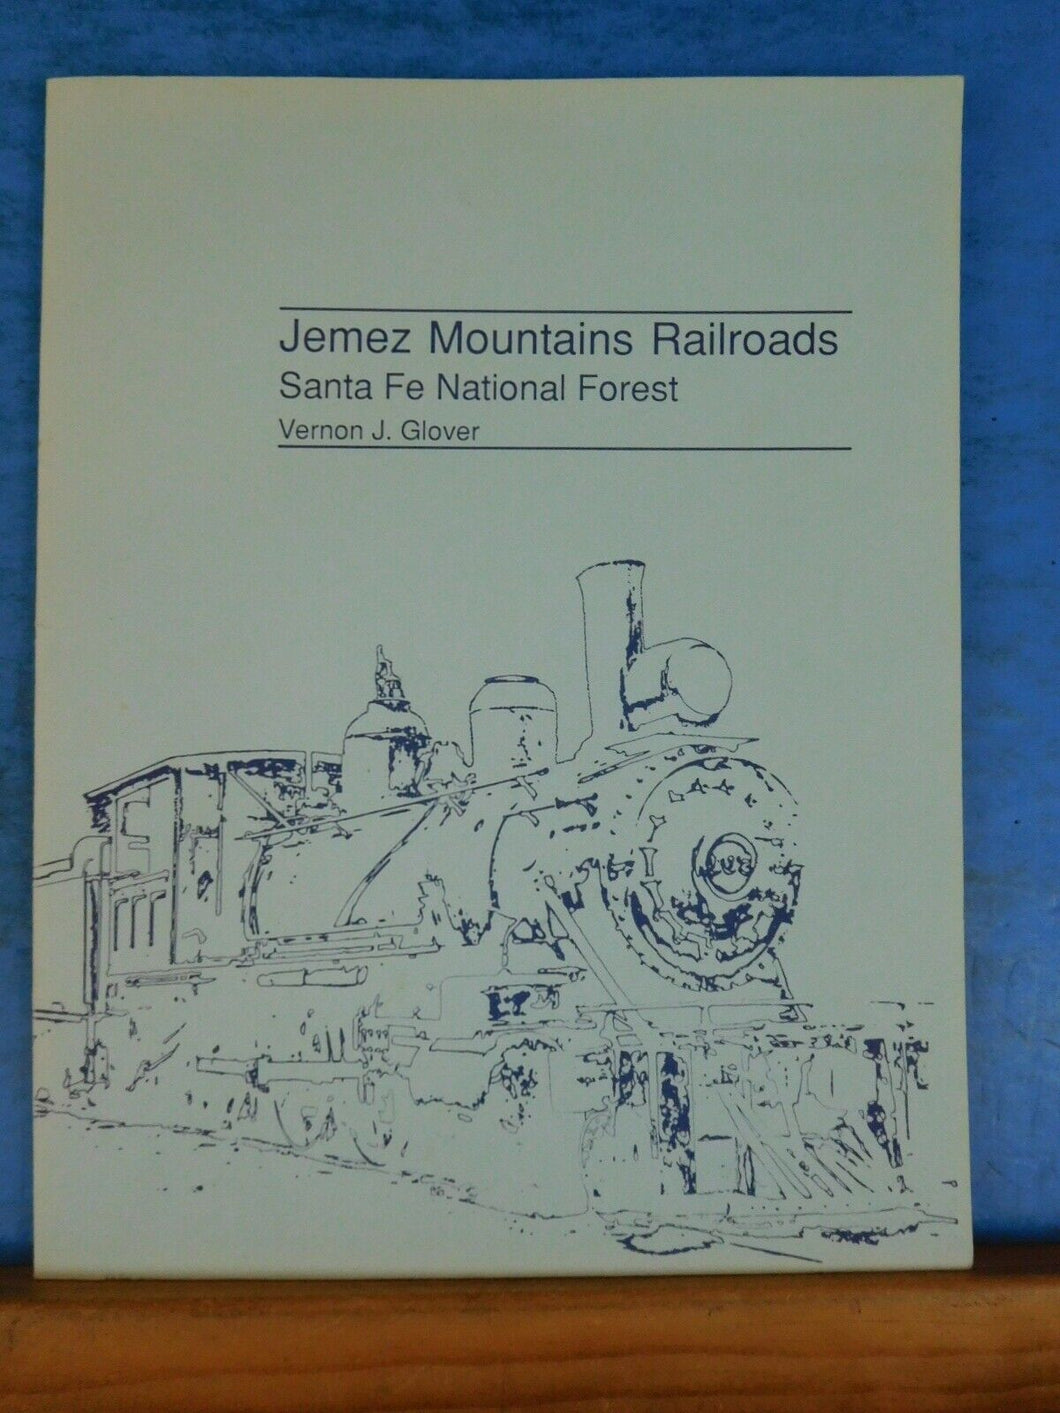 Jemez Mountains Railroads Santa Fe National Forest by Vernon J Glover